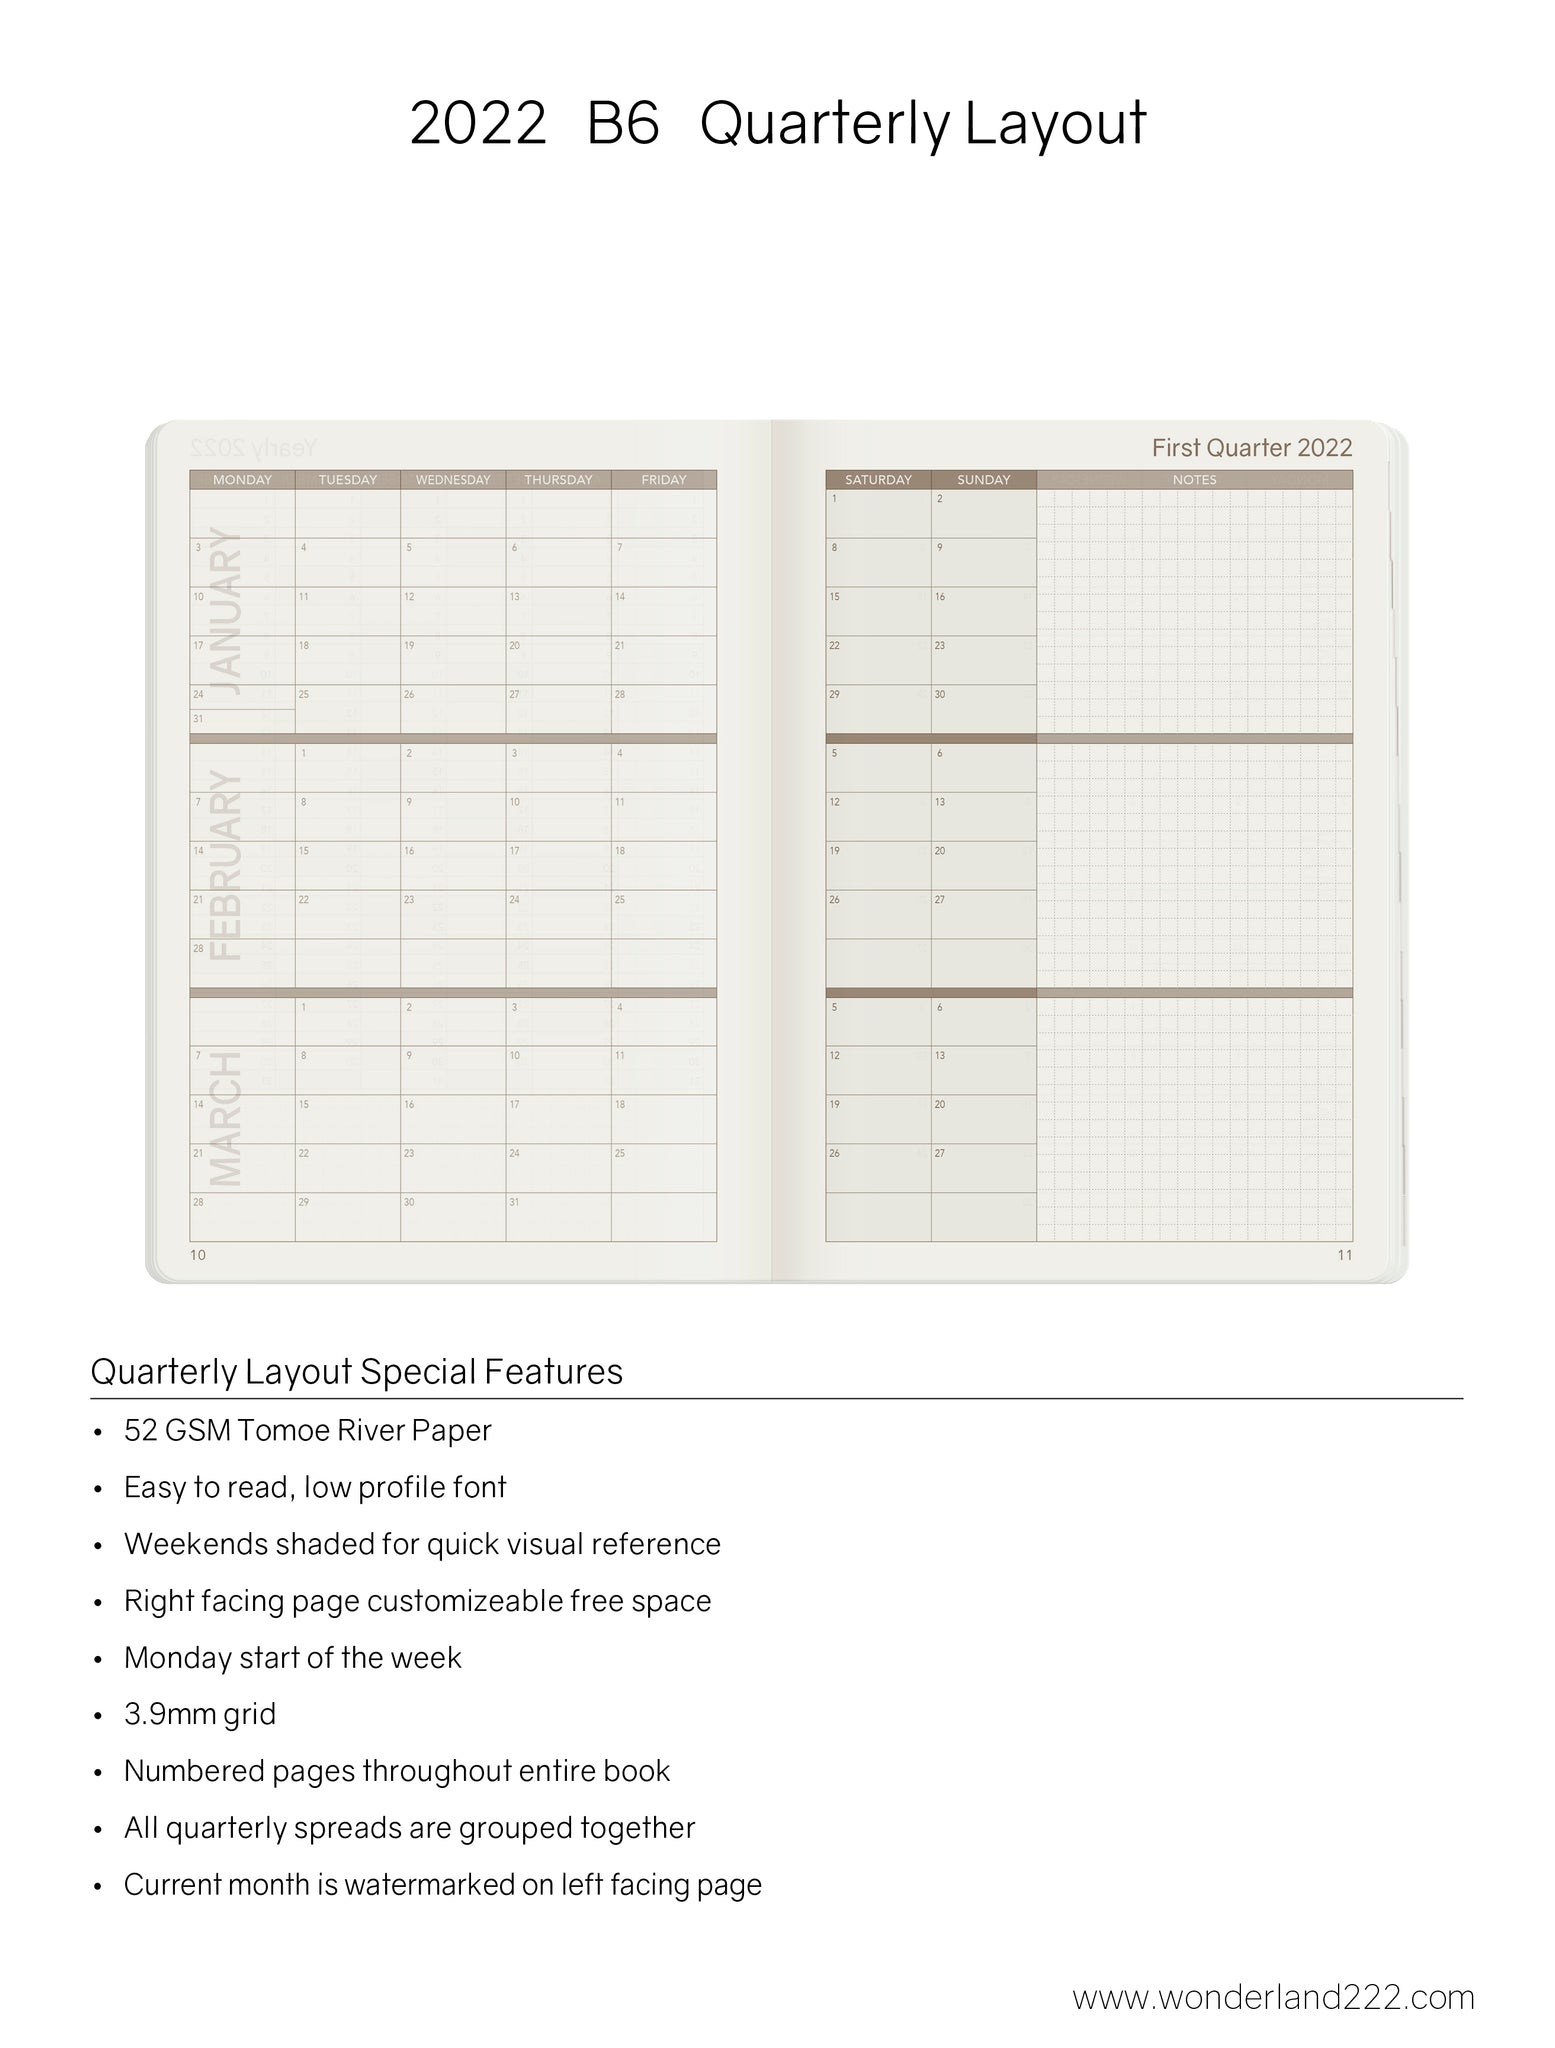 Overstock Sale! - B6 2022 Weekly Planner - 52gsm Tomoe River Paper